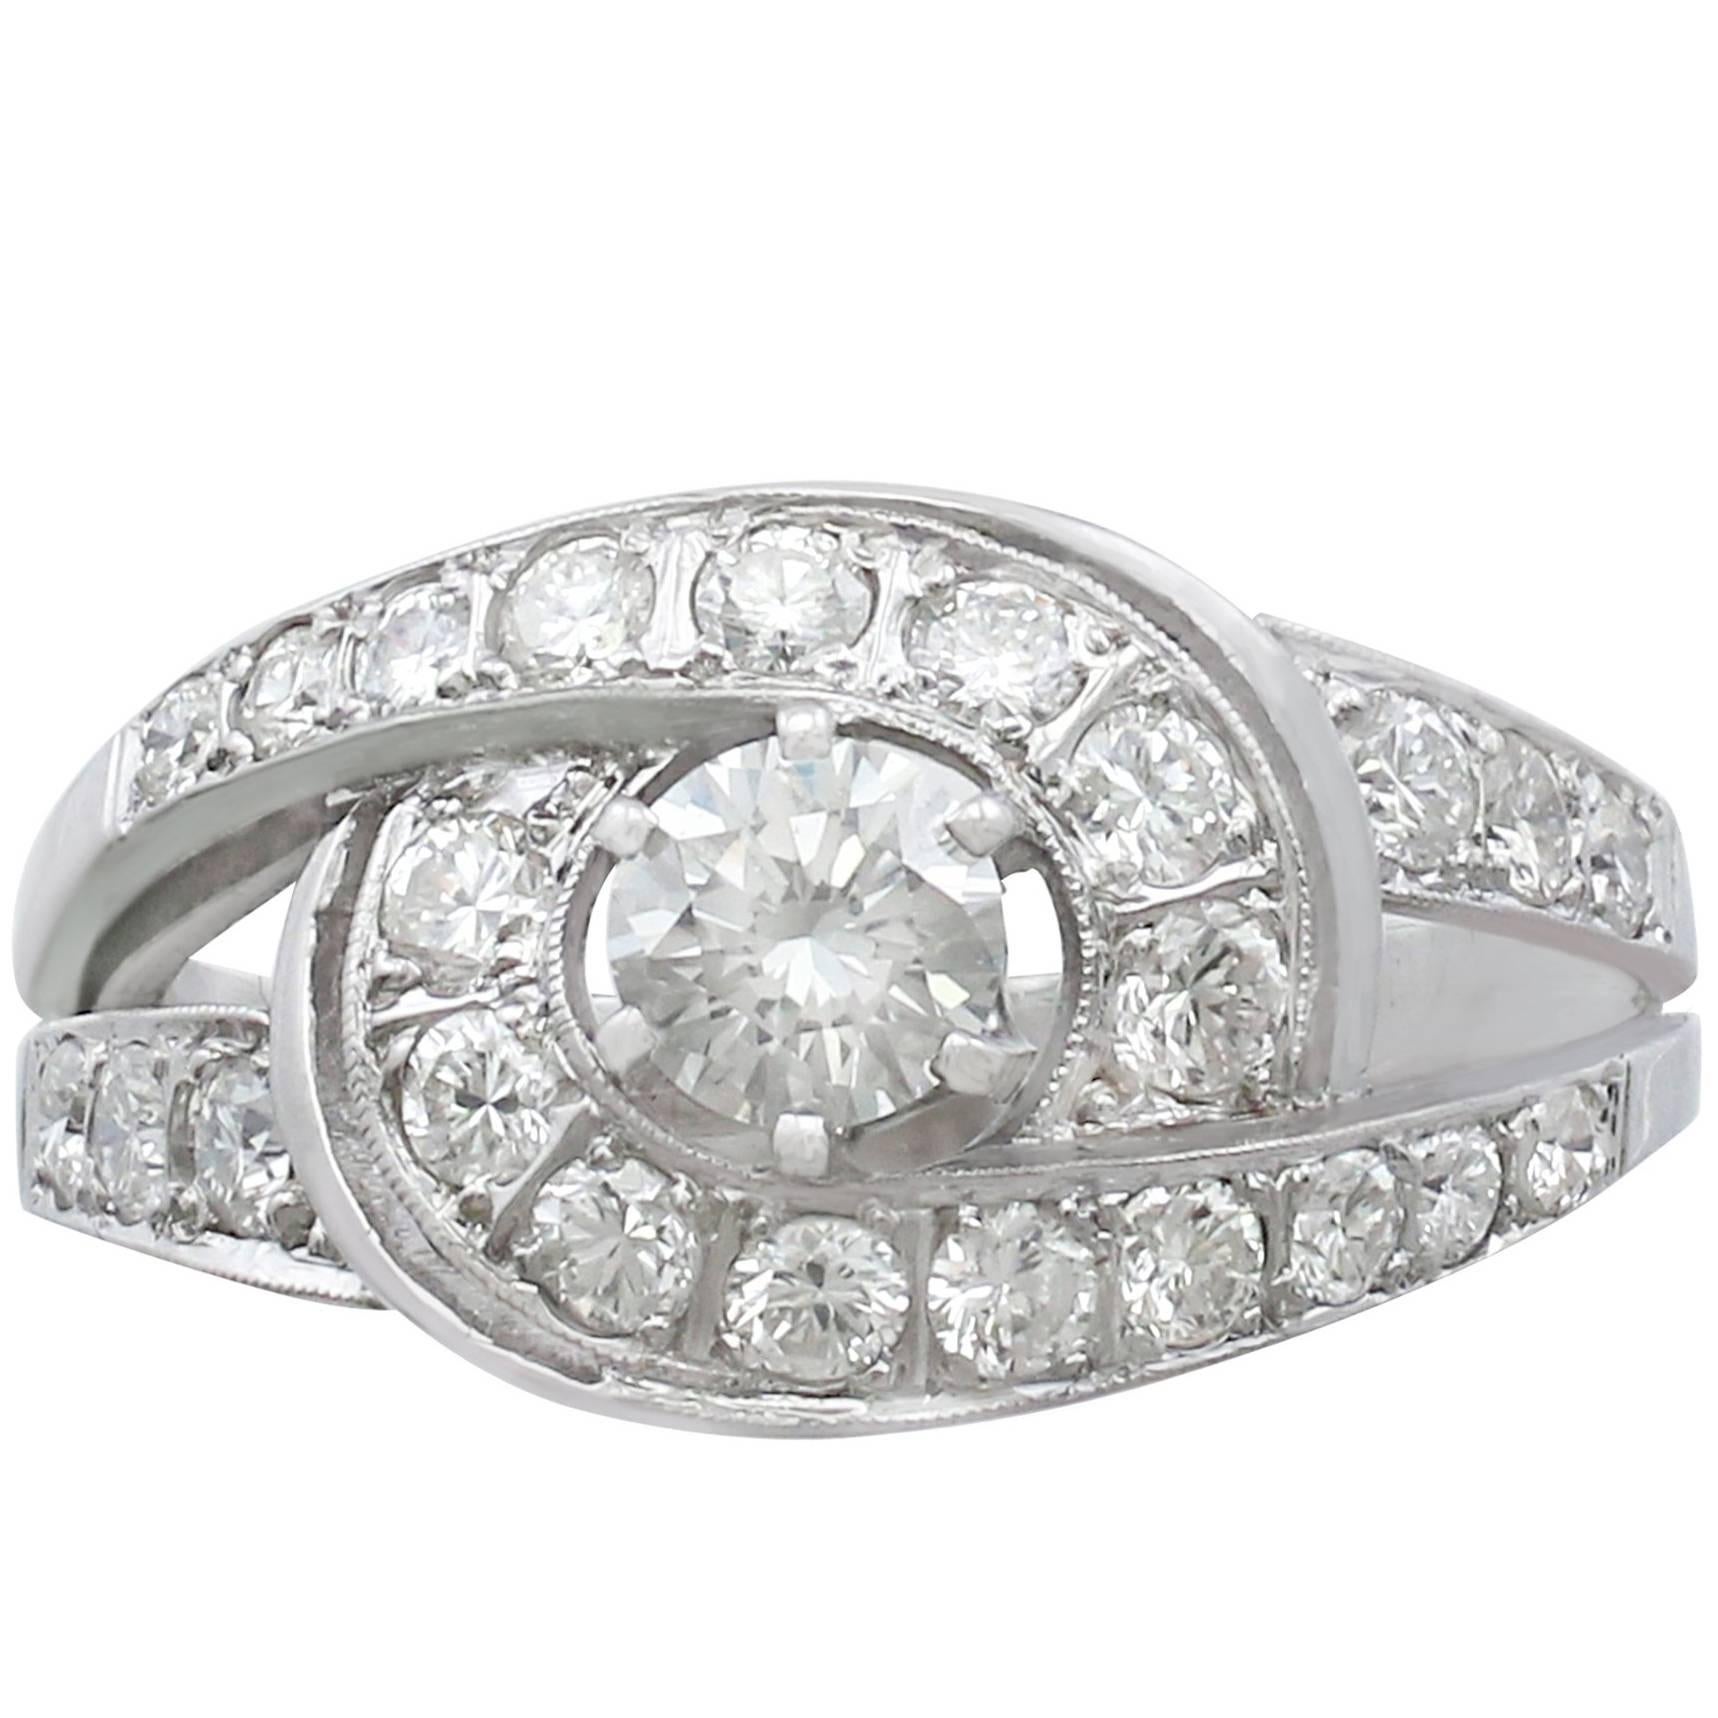 1960s German 1.88 Carat Diamond and White Gold Dress Ring